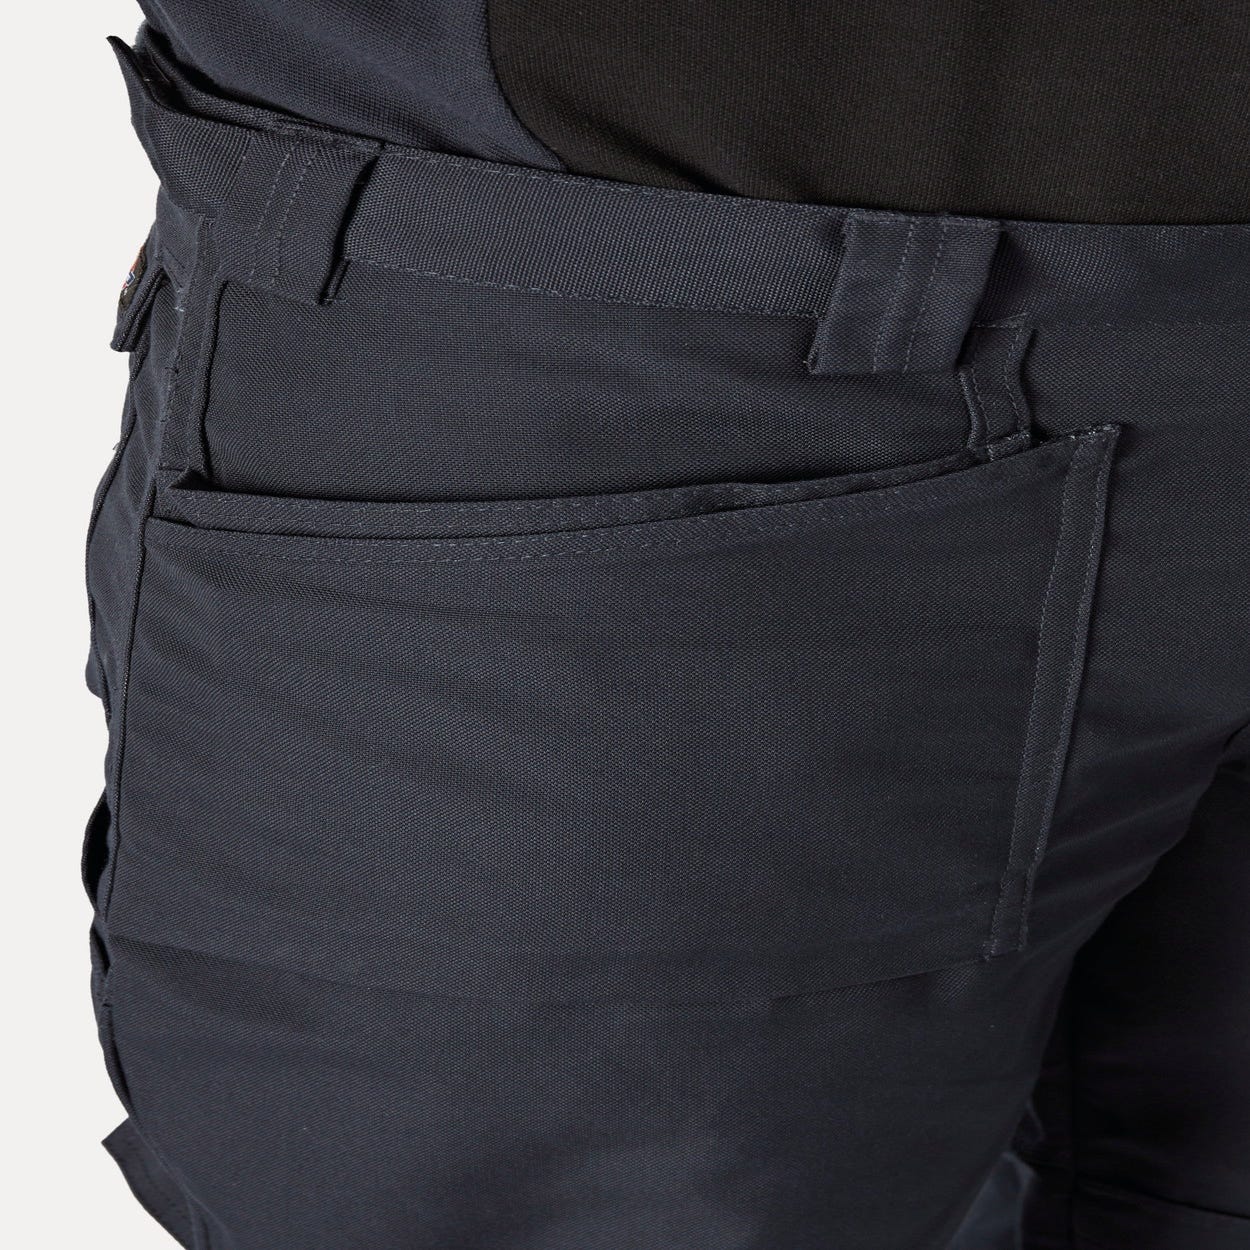 Pantalon Eisenhower multi-poches Bleu marine - Dickies - Taille 42 8